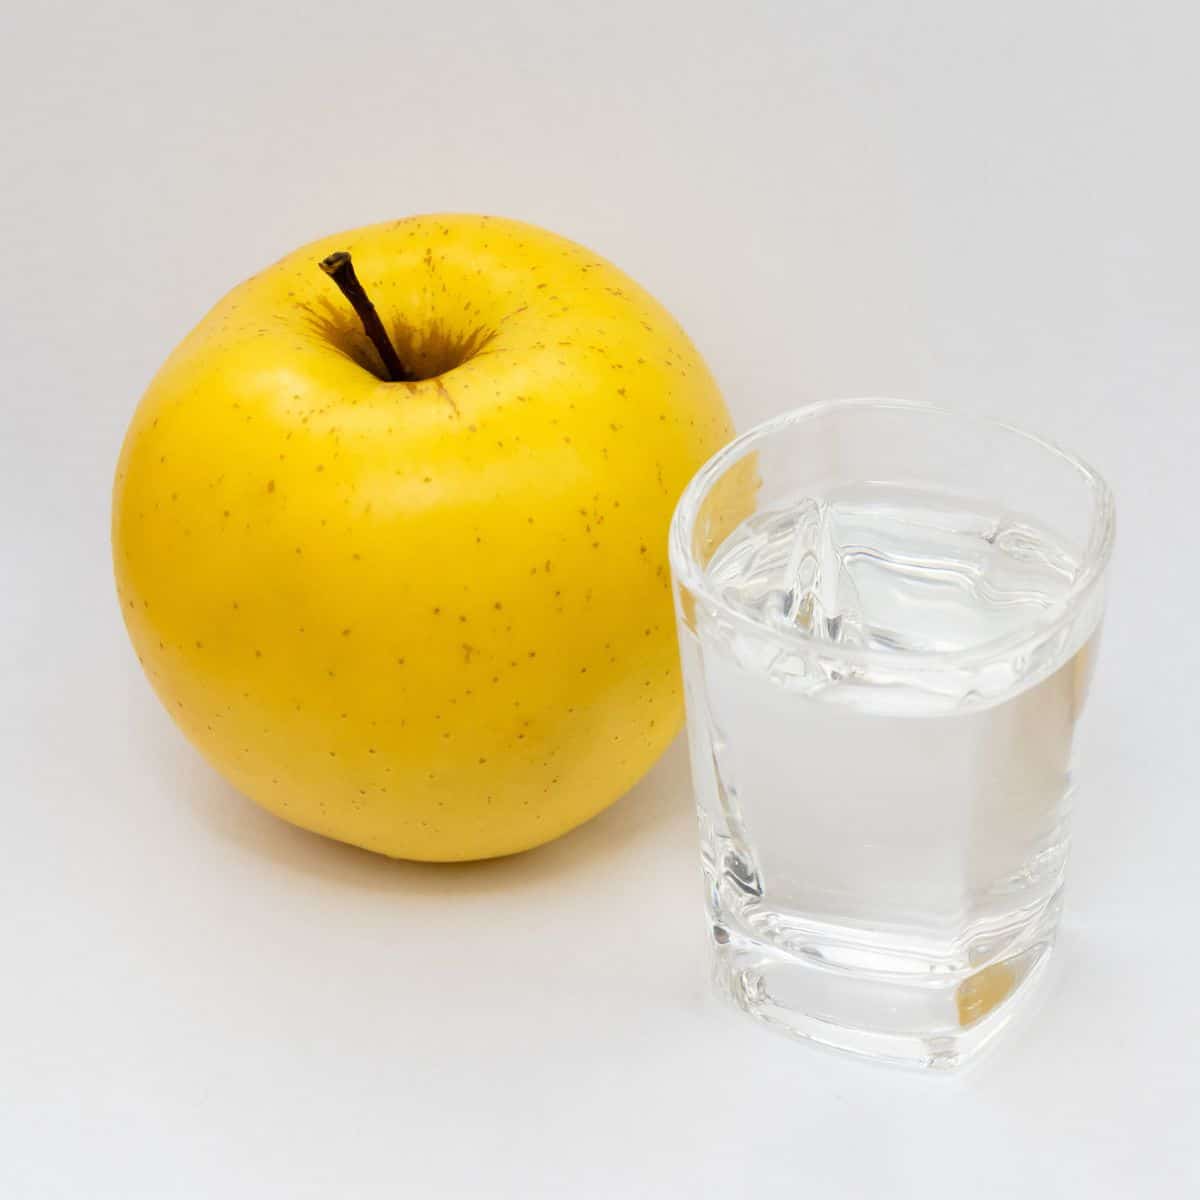 Rajka apple on a white background next to a shot glass.